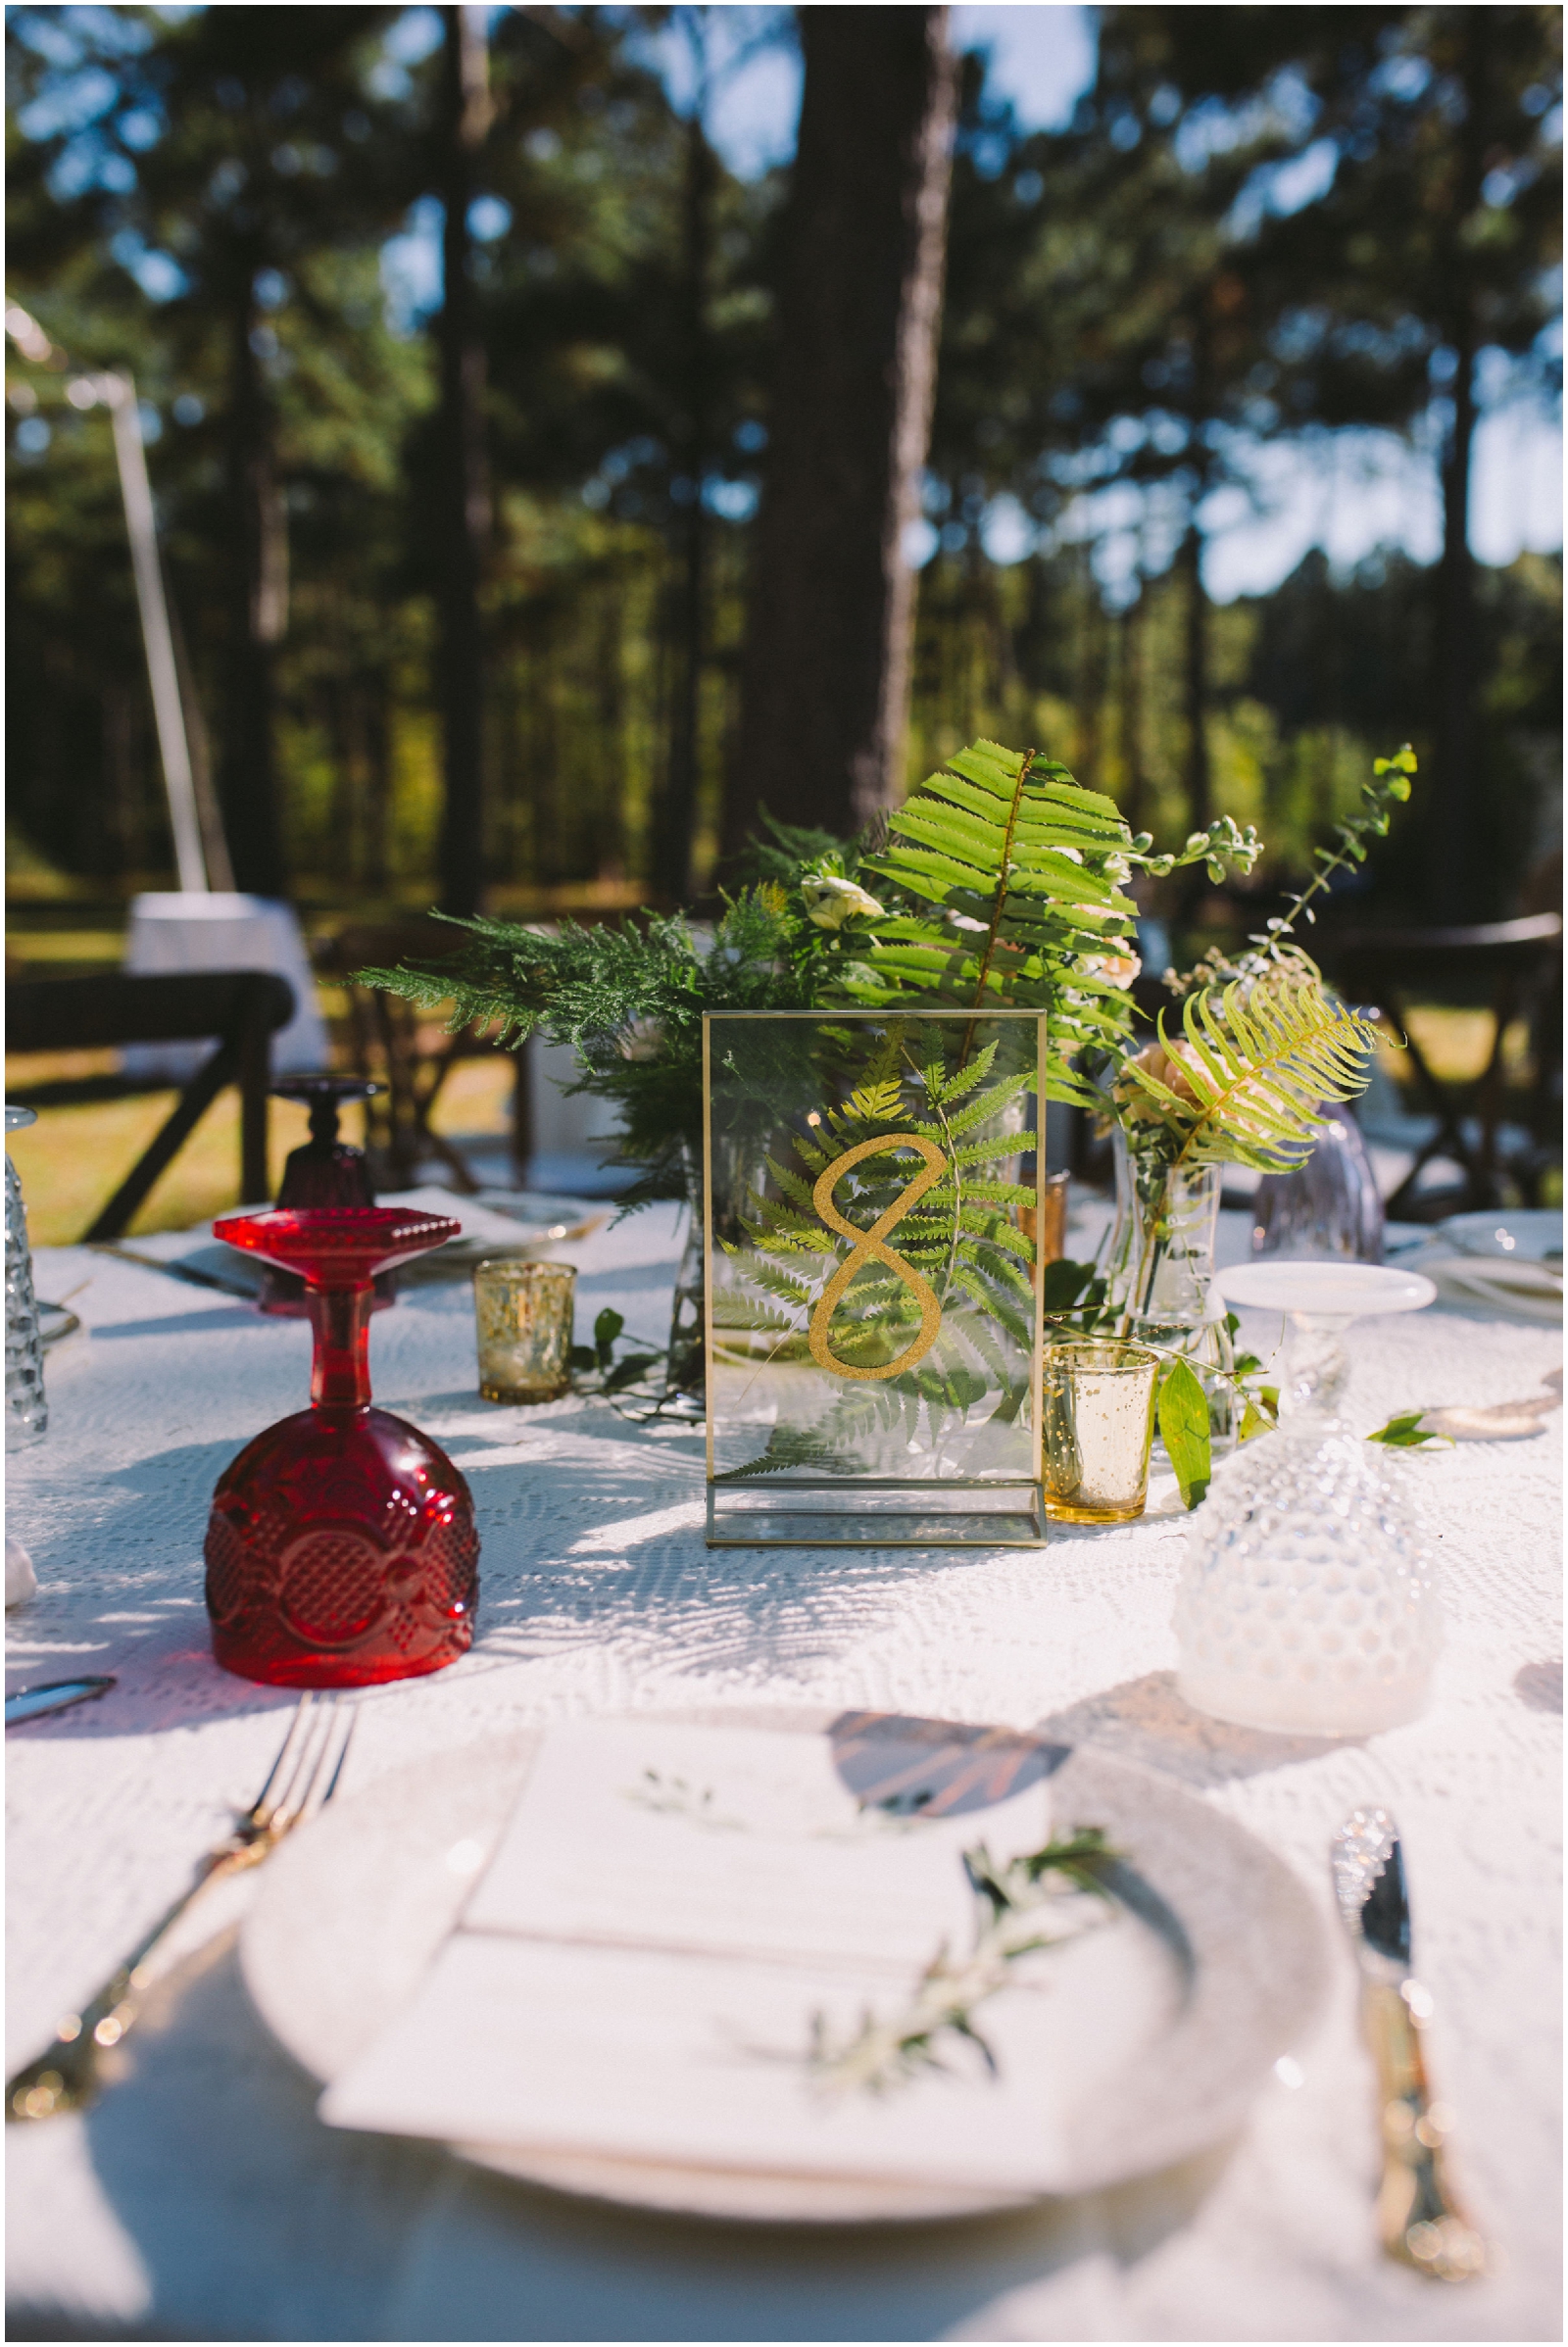  Wedding Table Set and Centerpiece Ideas 